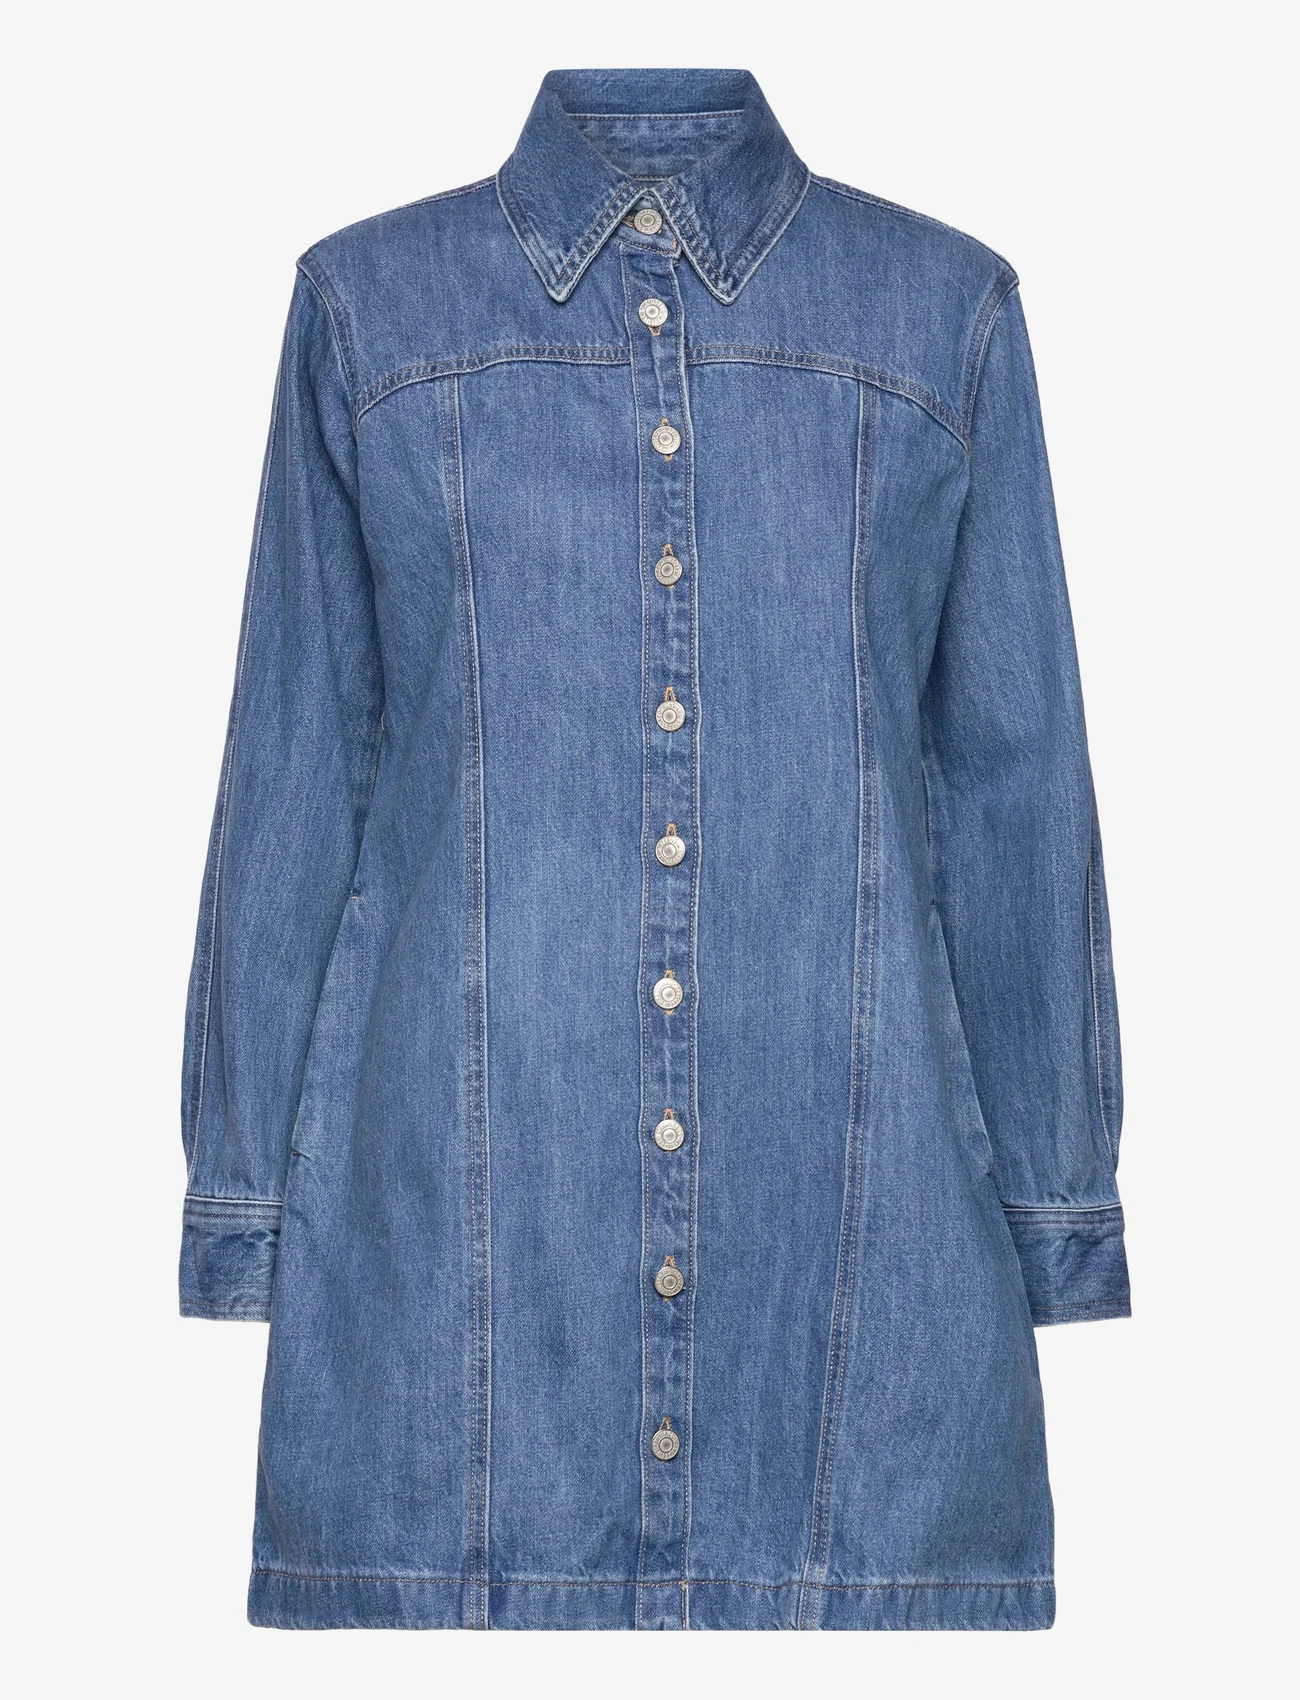 LEVI´S Women - SHAY DENIM DRESS OLD 517 BLUE - denim dresses - light indigo - worn in - 0